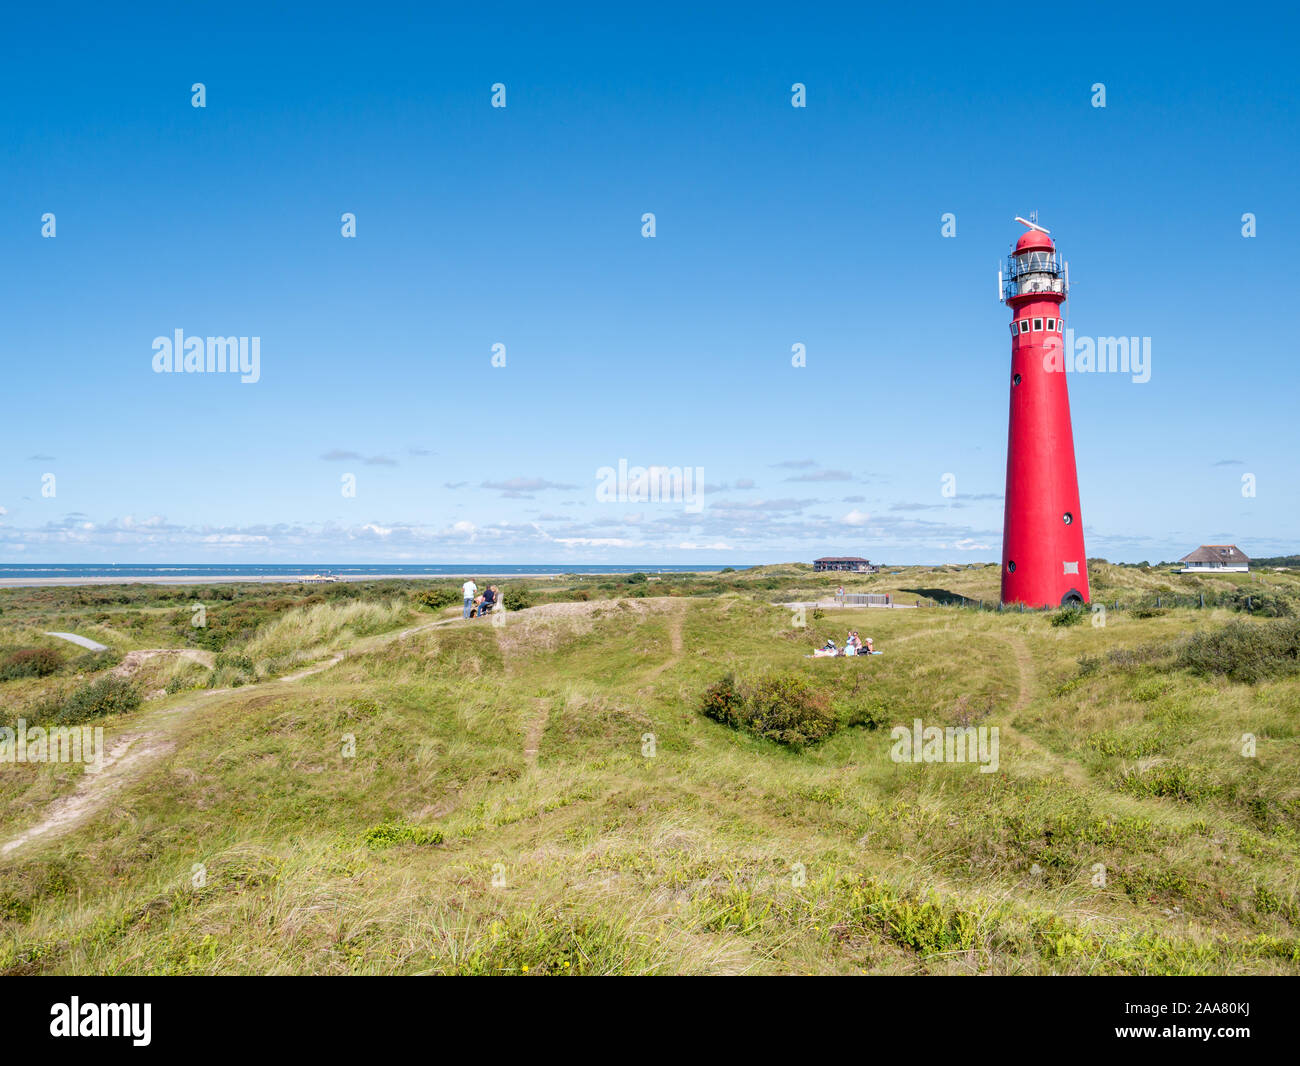 People relaxing near lighthouse in dunes on West Frisian island Schiermonnikoog, Netherlands Stock Photo